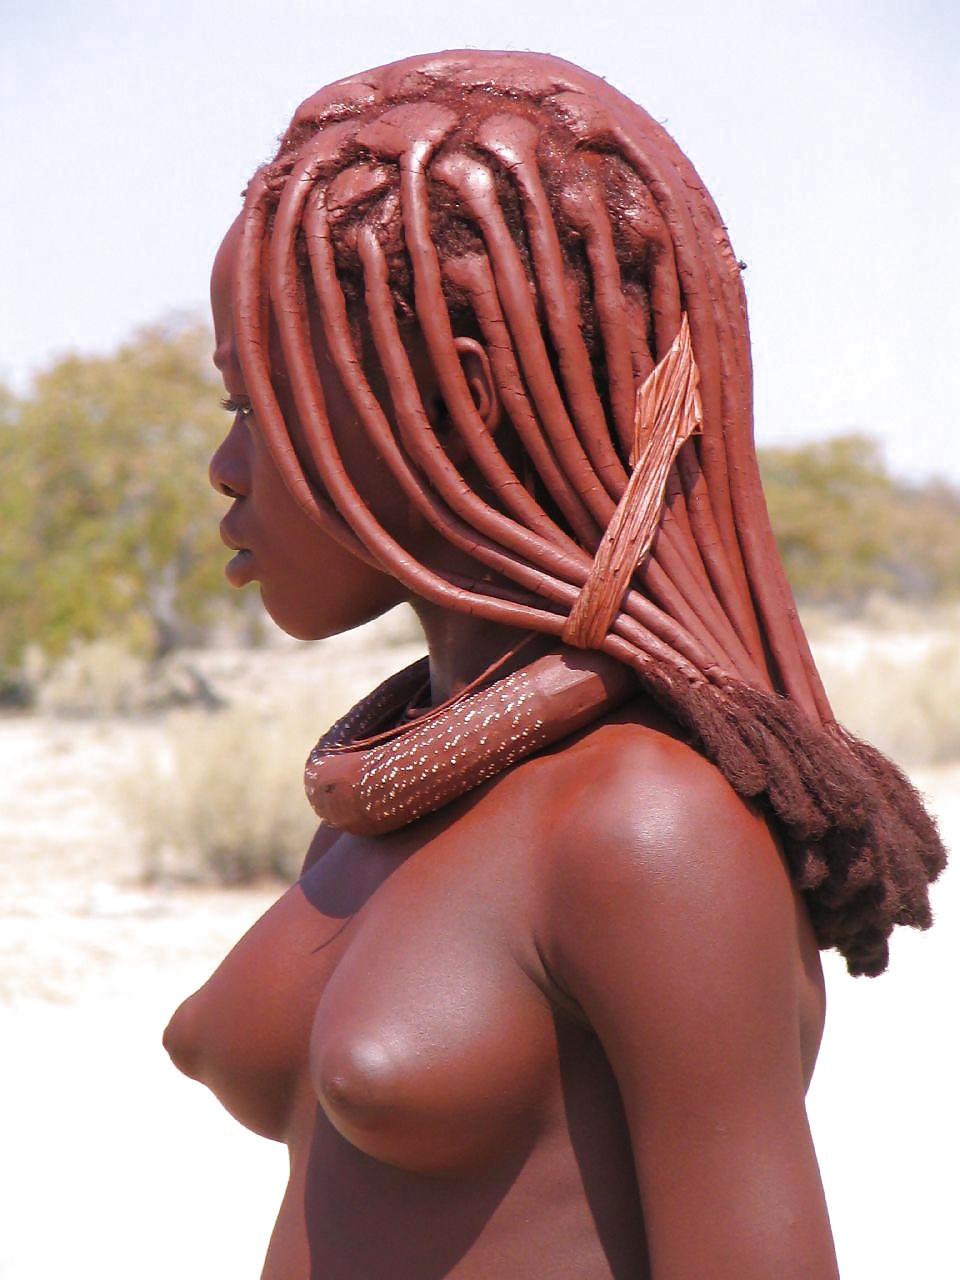 Schwarzafrikanern Ebenholz Big Tits #27647088